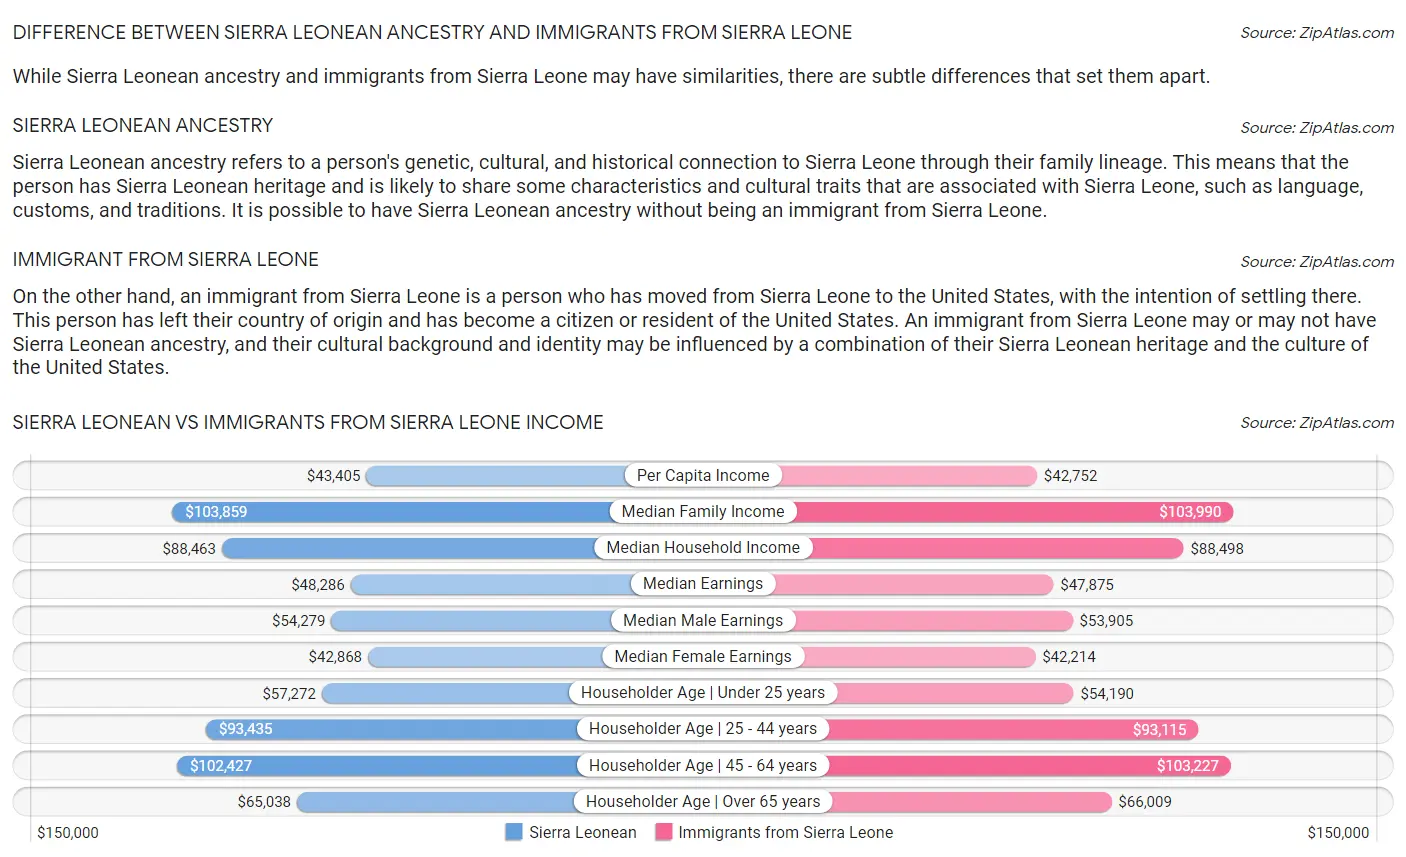 Sierra Leonean vs Immigrants from Sierra Leone Income